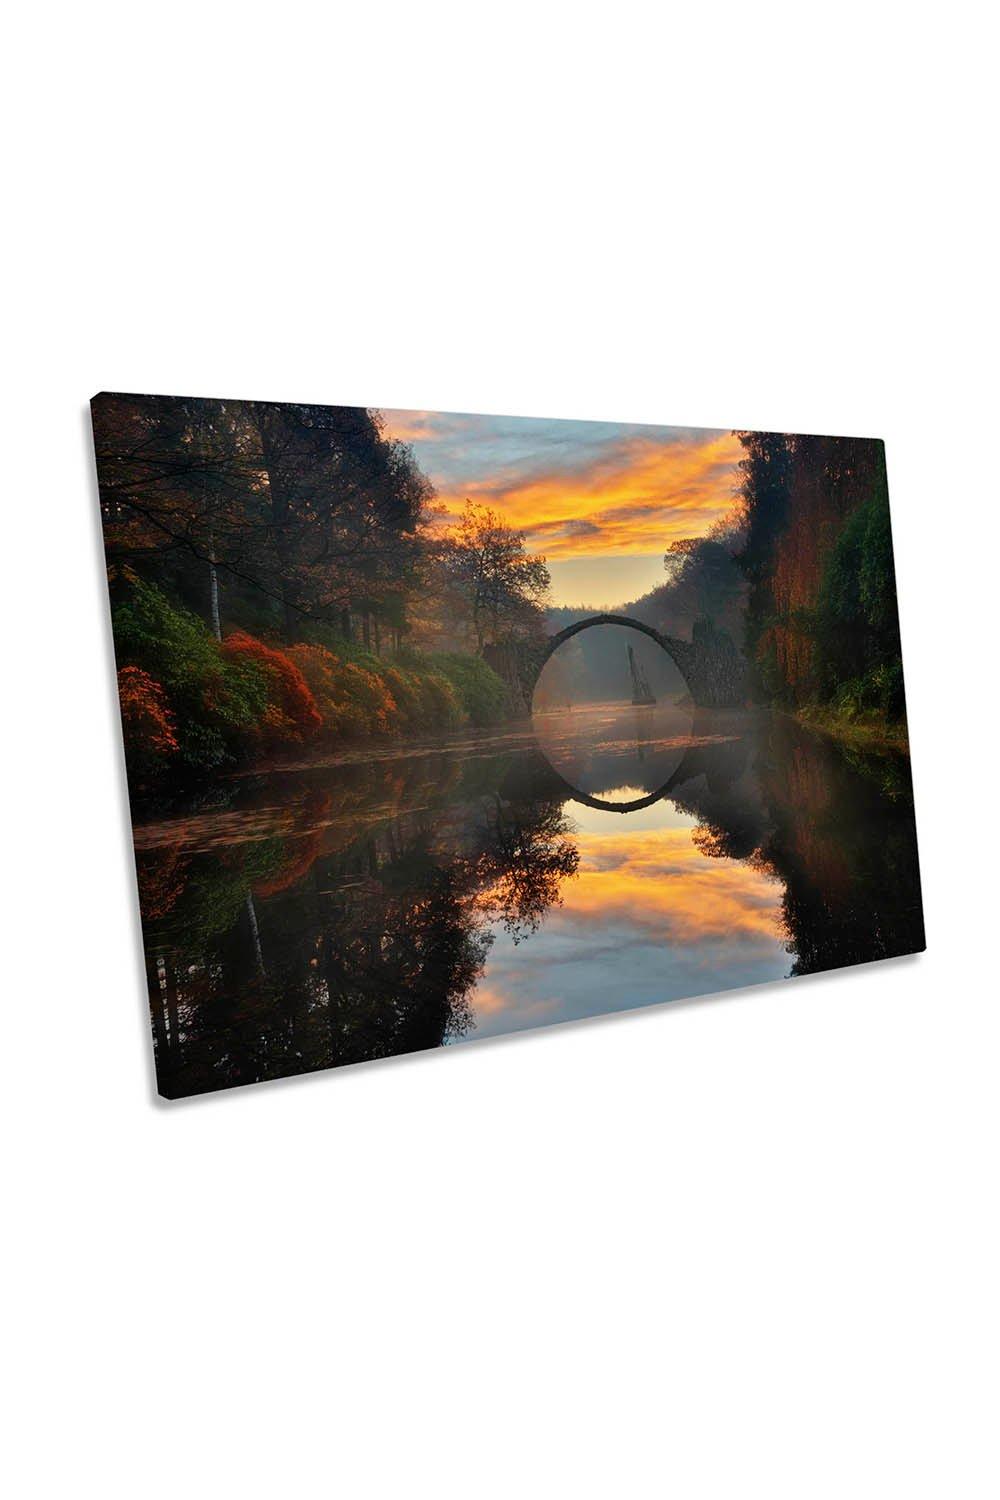 Autumn Garden Sunset Lake Bridge Canvas Wall Art Picture Print